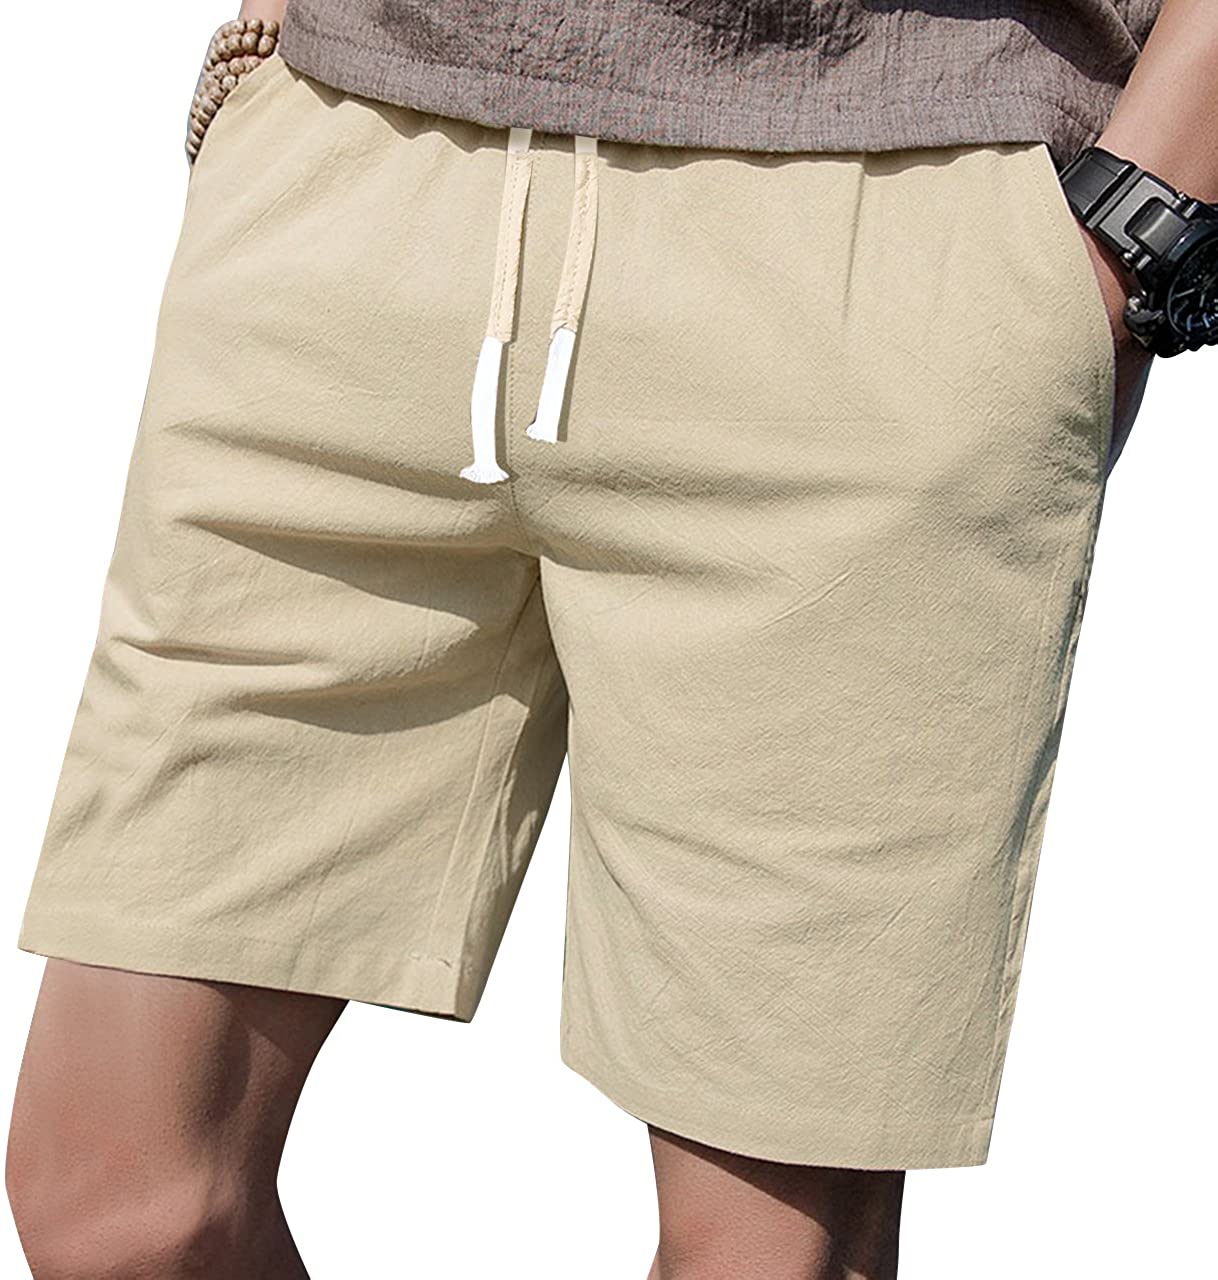 best 7 inch inseam khaki shorts for men